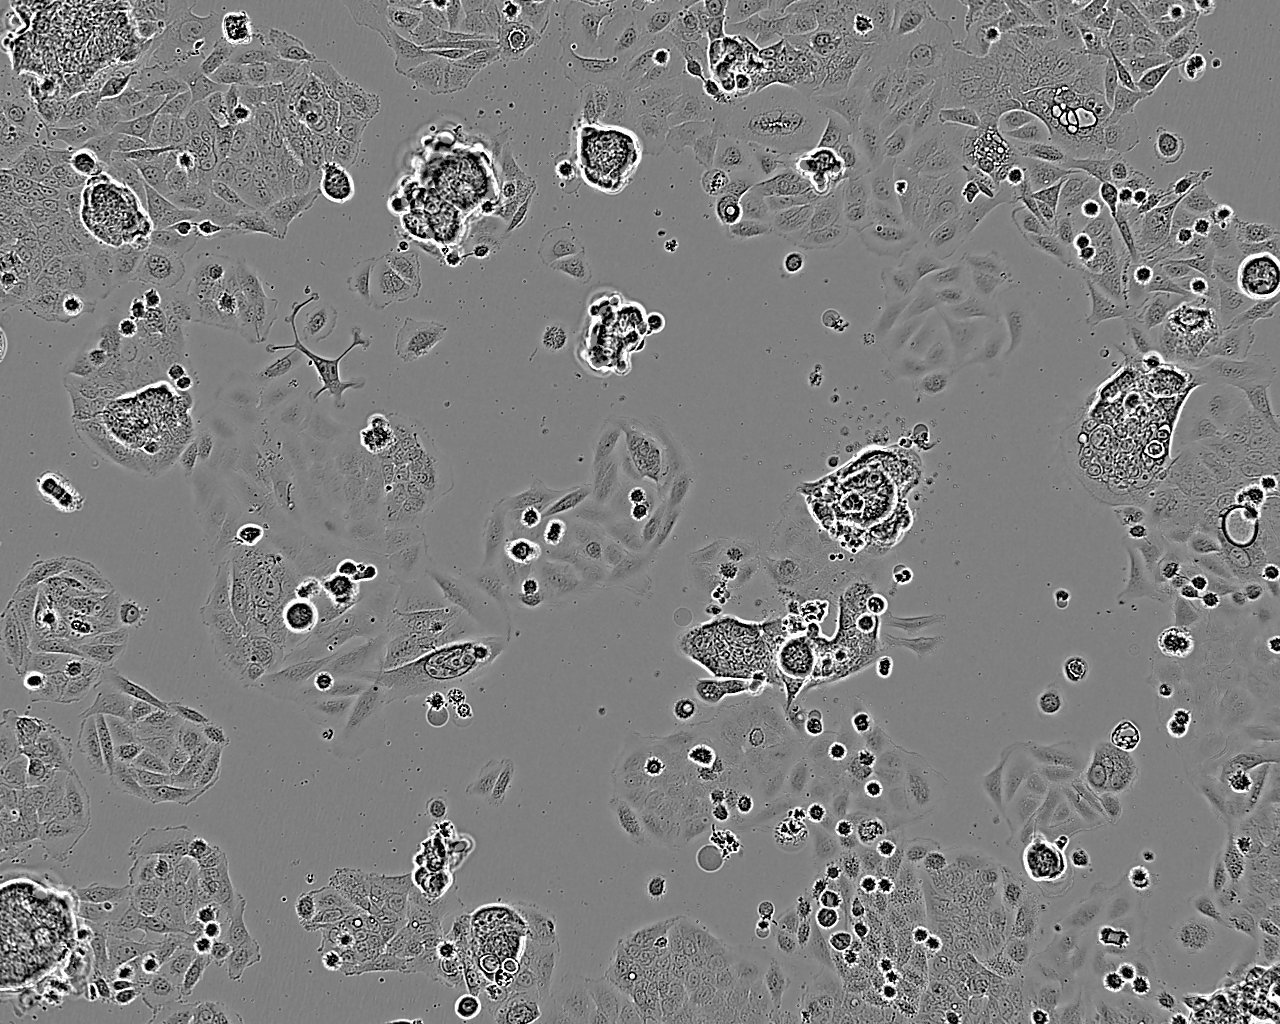 NCI-H1373 Fresh Cells|人肺癌腺癌细胞(送STR基因图谱)